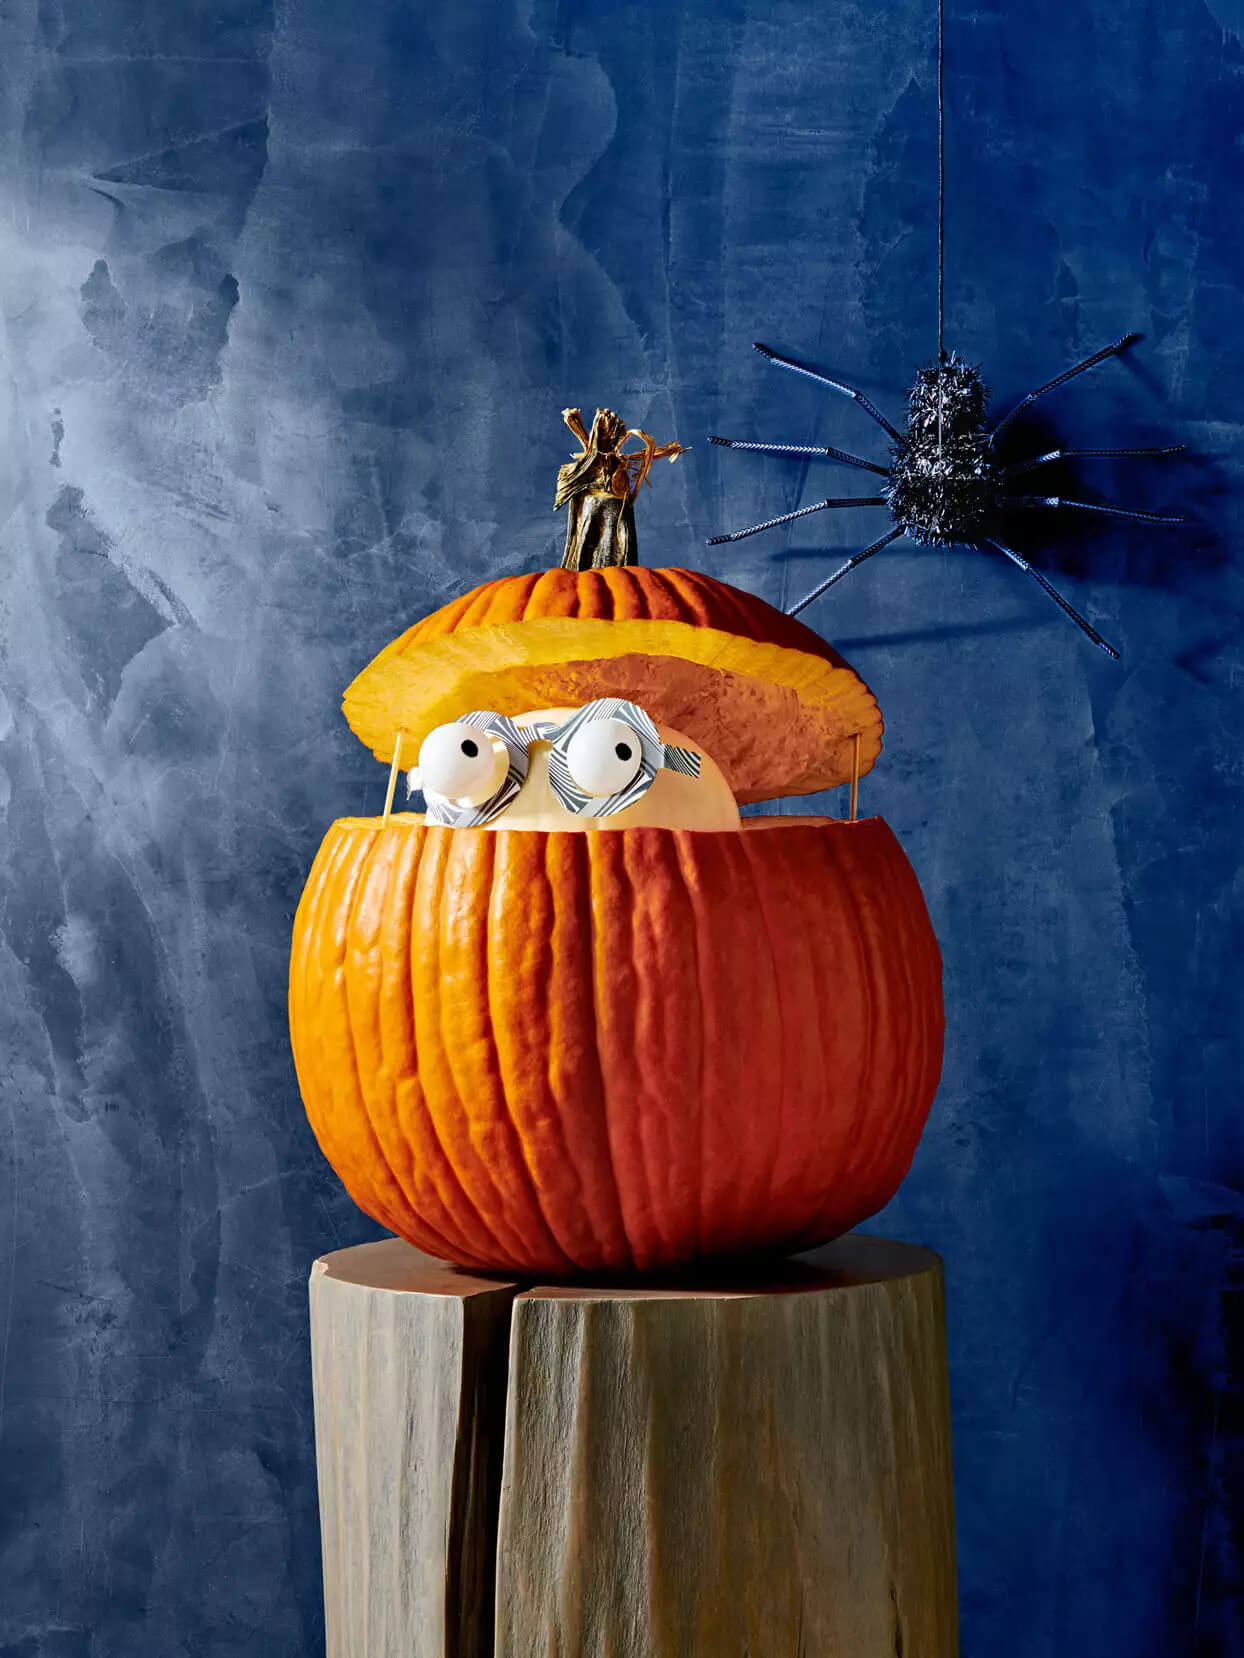 Handmade Nice Spooky Pumpkin Craft For Home DecorPumpkin Carving Ideas For Halloween 